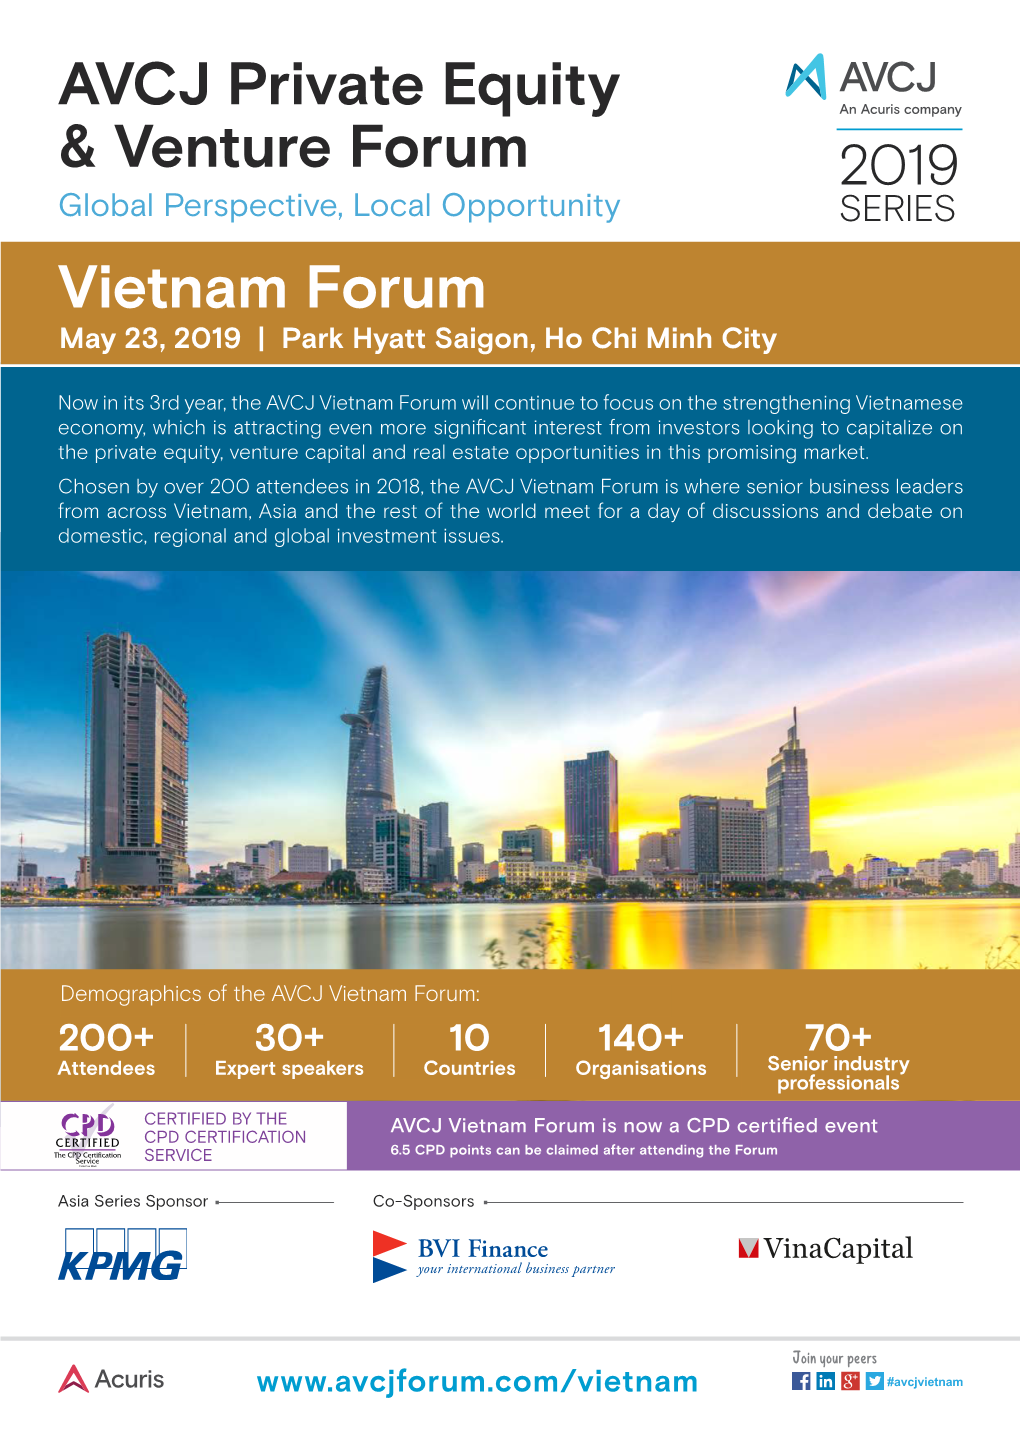 AVCJ Private Equity & Venture Forum Vietnam Forum